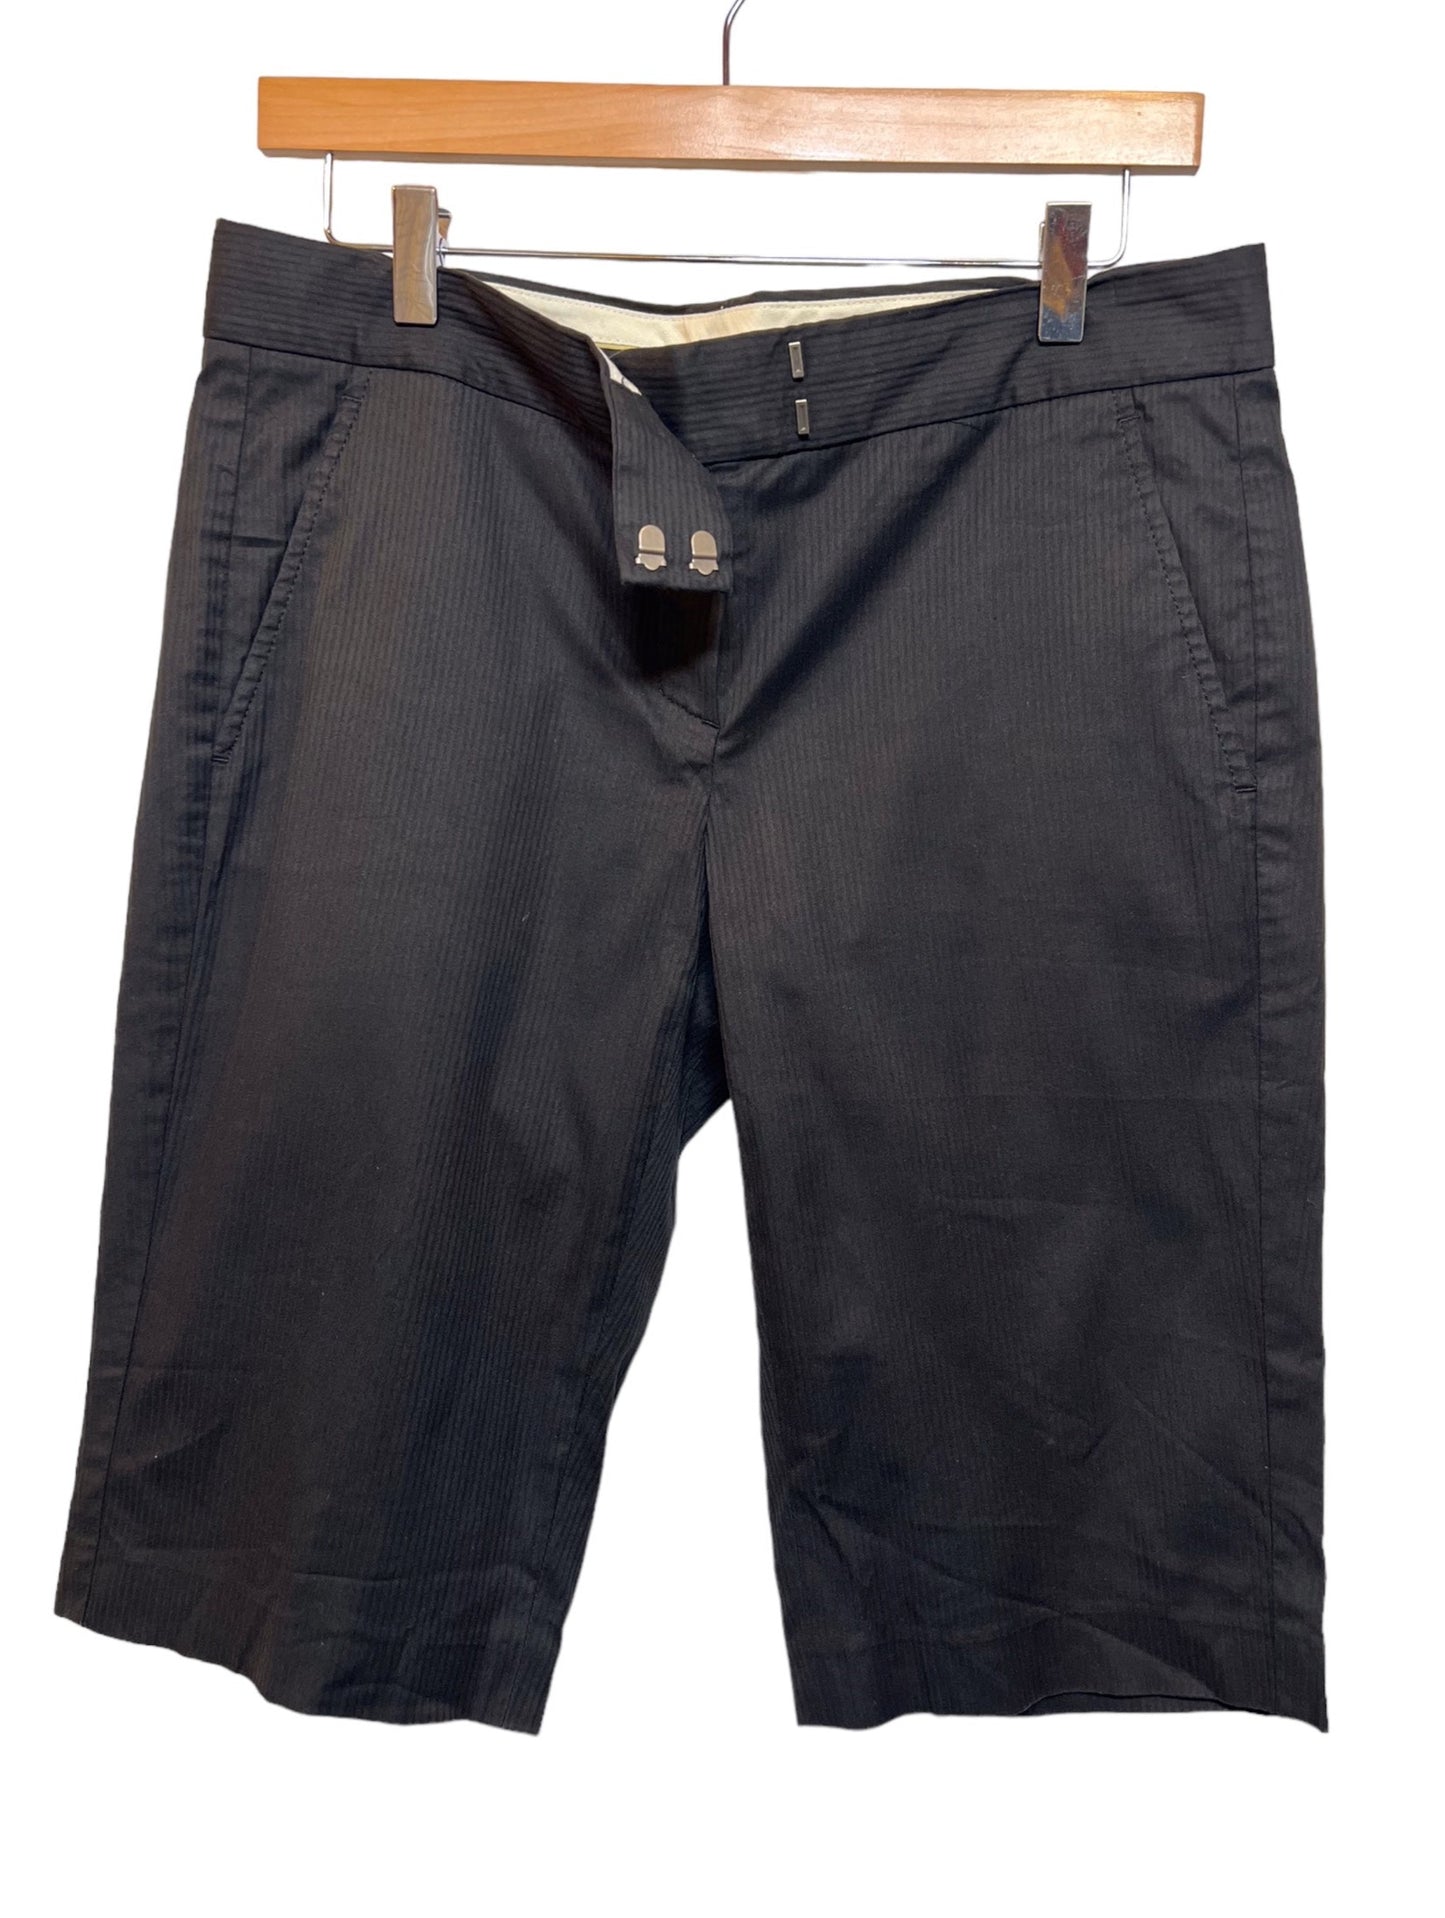 Men’s Black Smart Shorts (Size M)